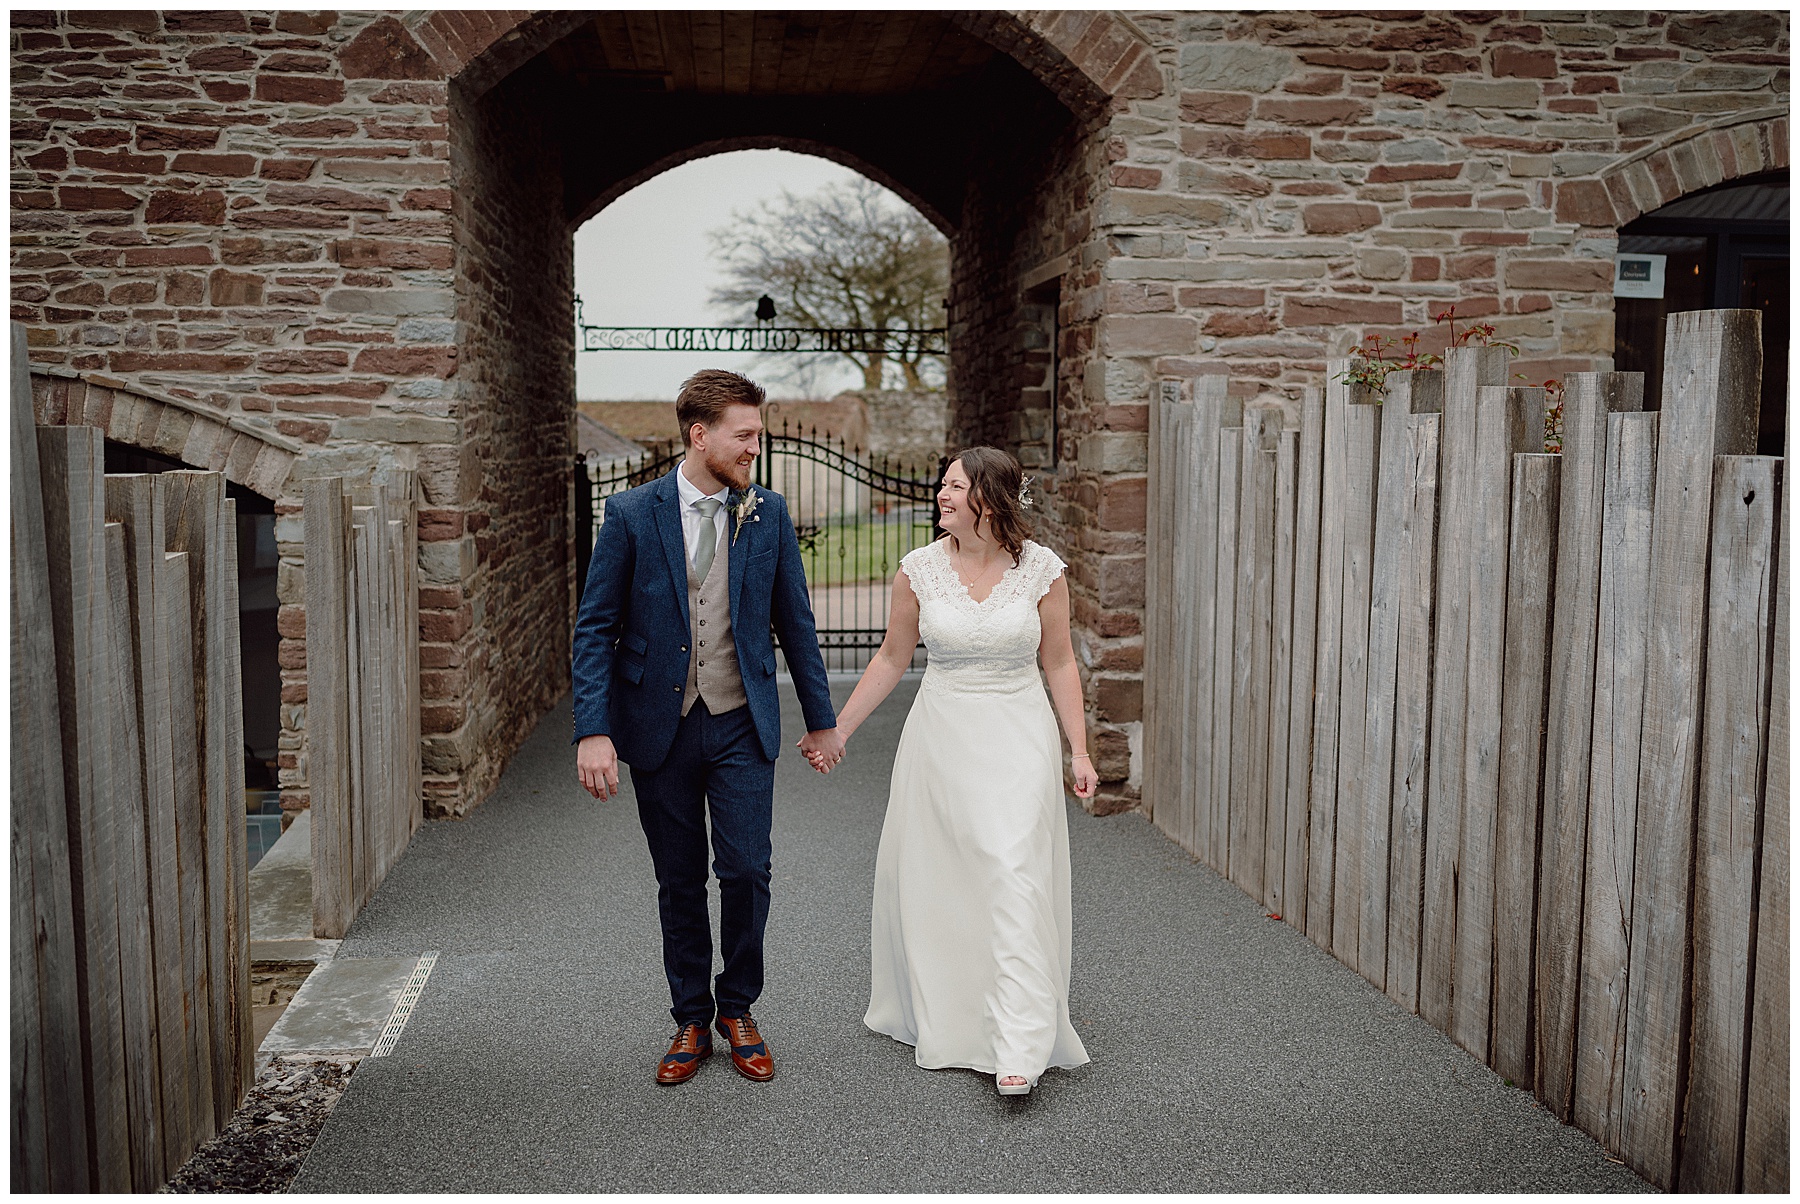 Courtyard Wales Wedding Photos with Bride & Groom